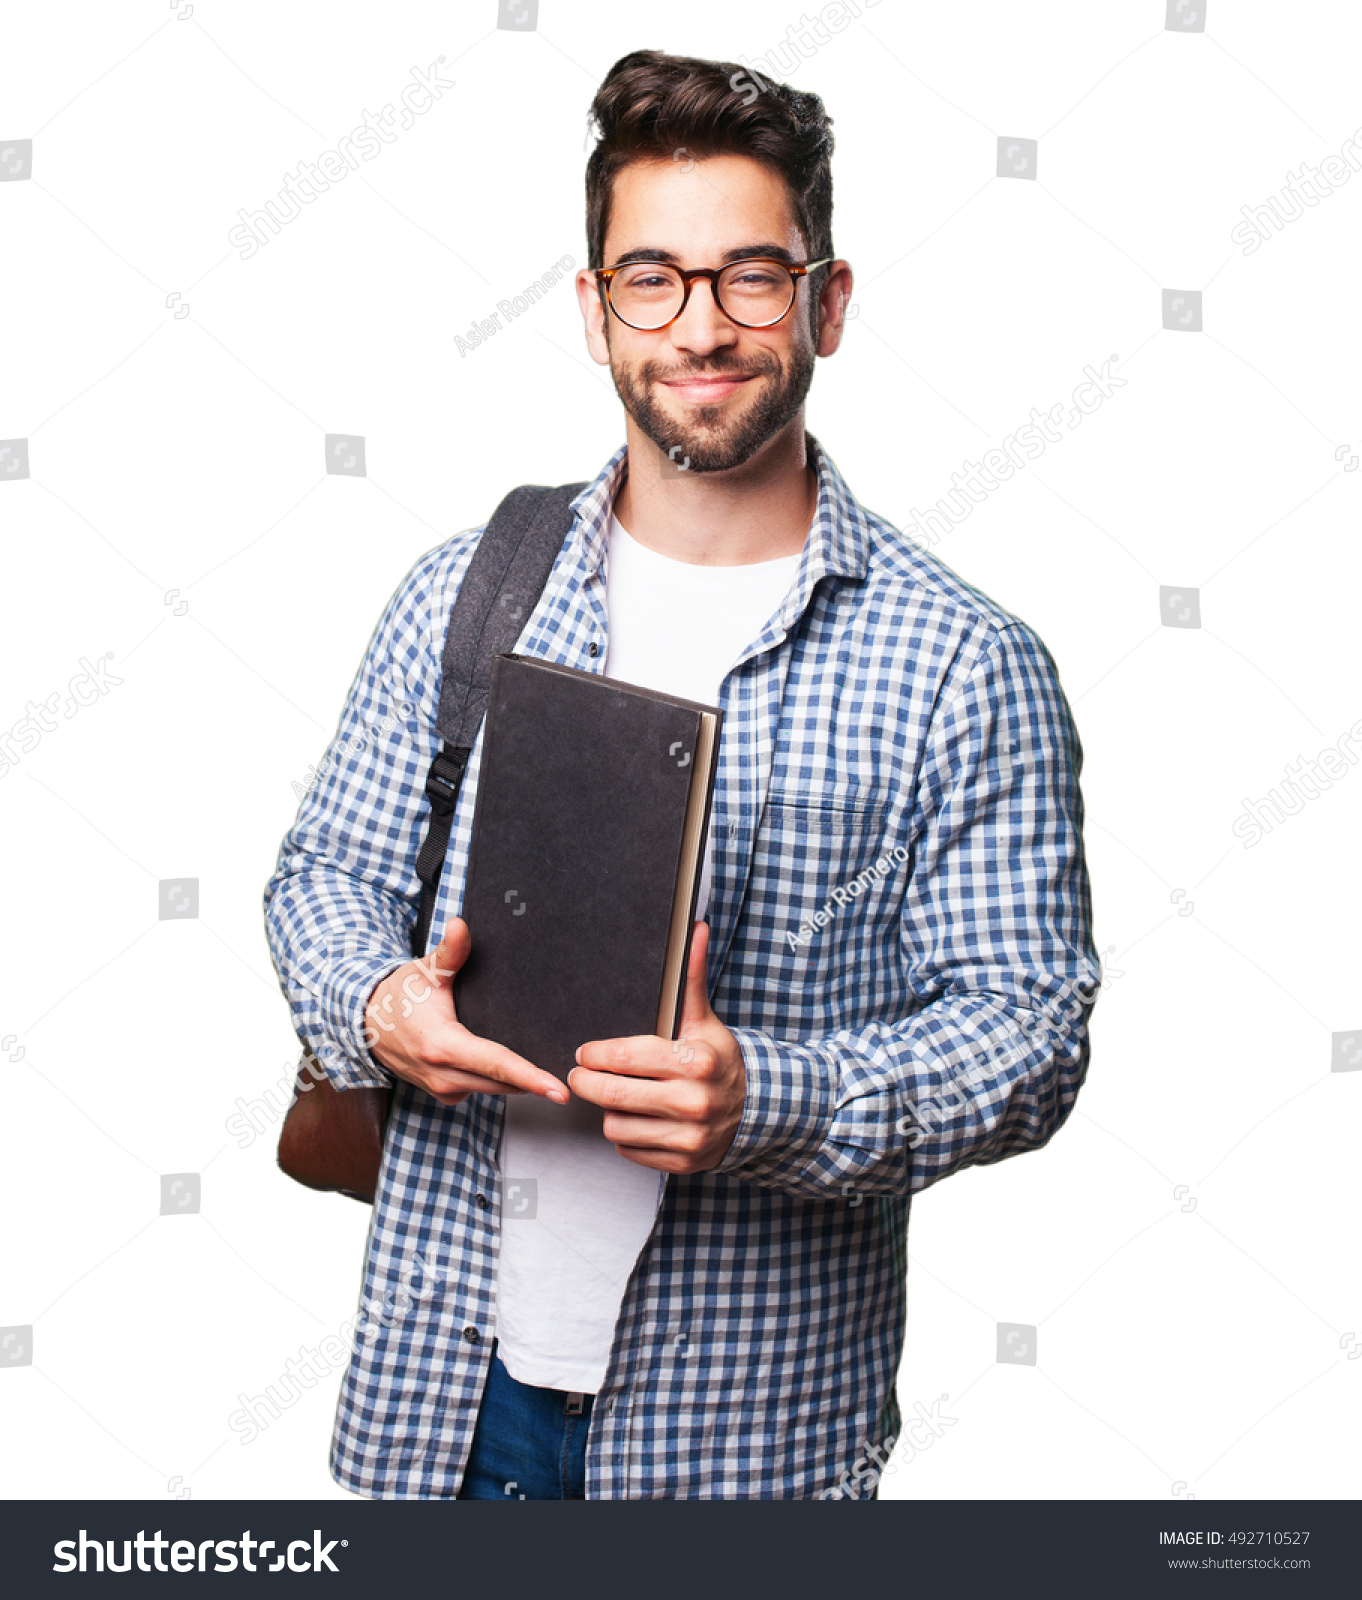 Student Man Holding Book Stock Photo 492710527 - Shutterstock